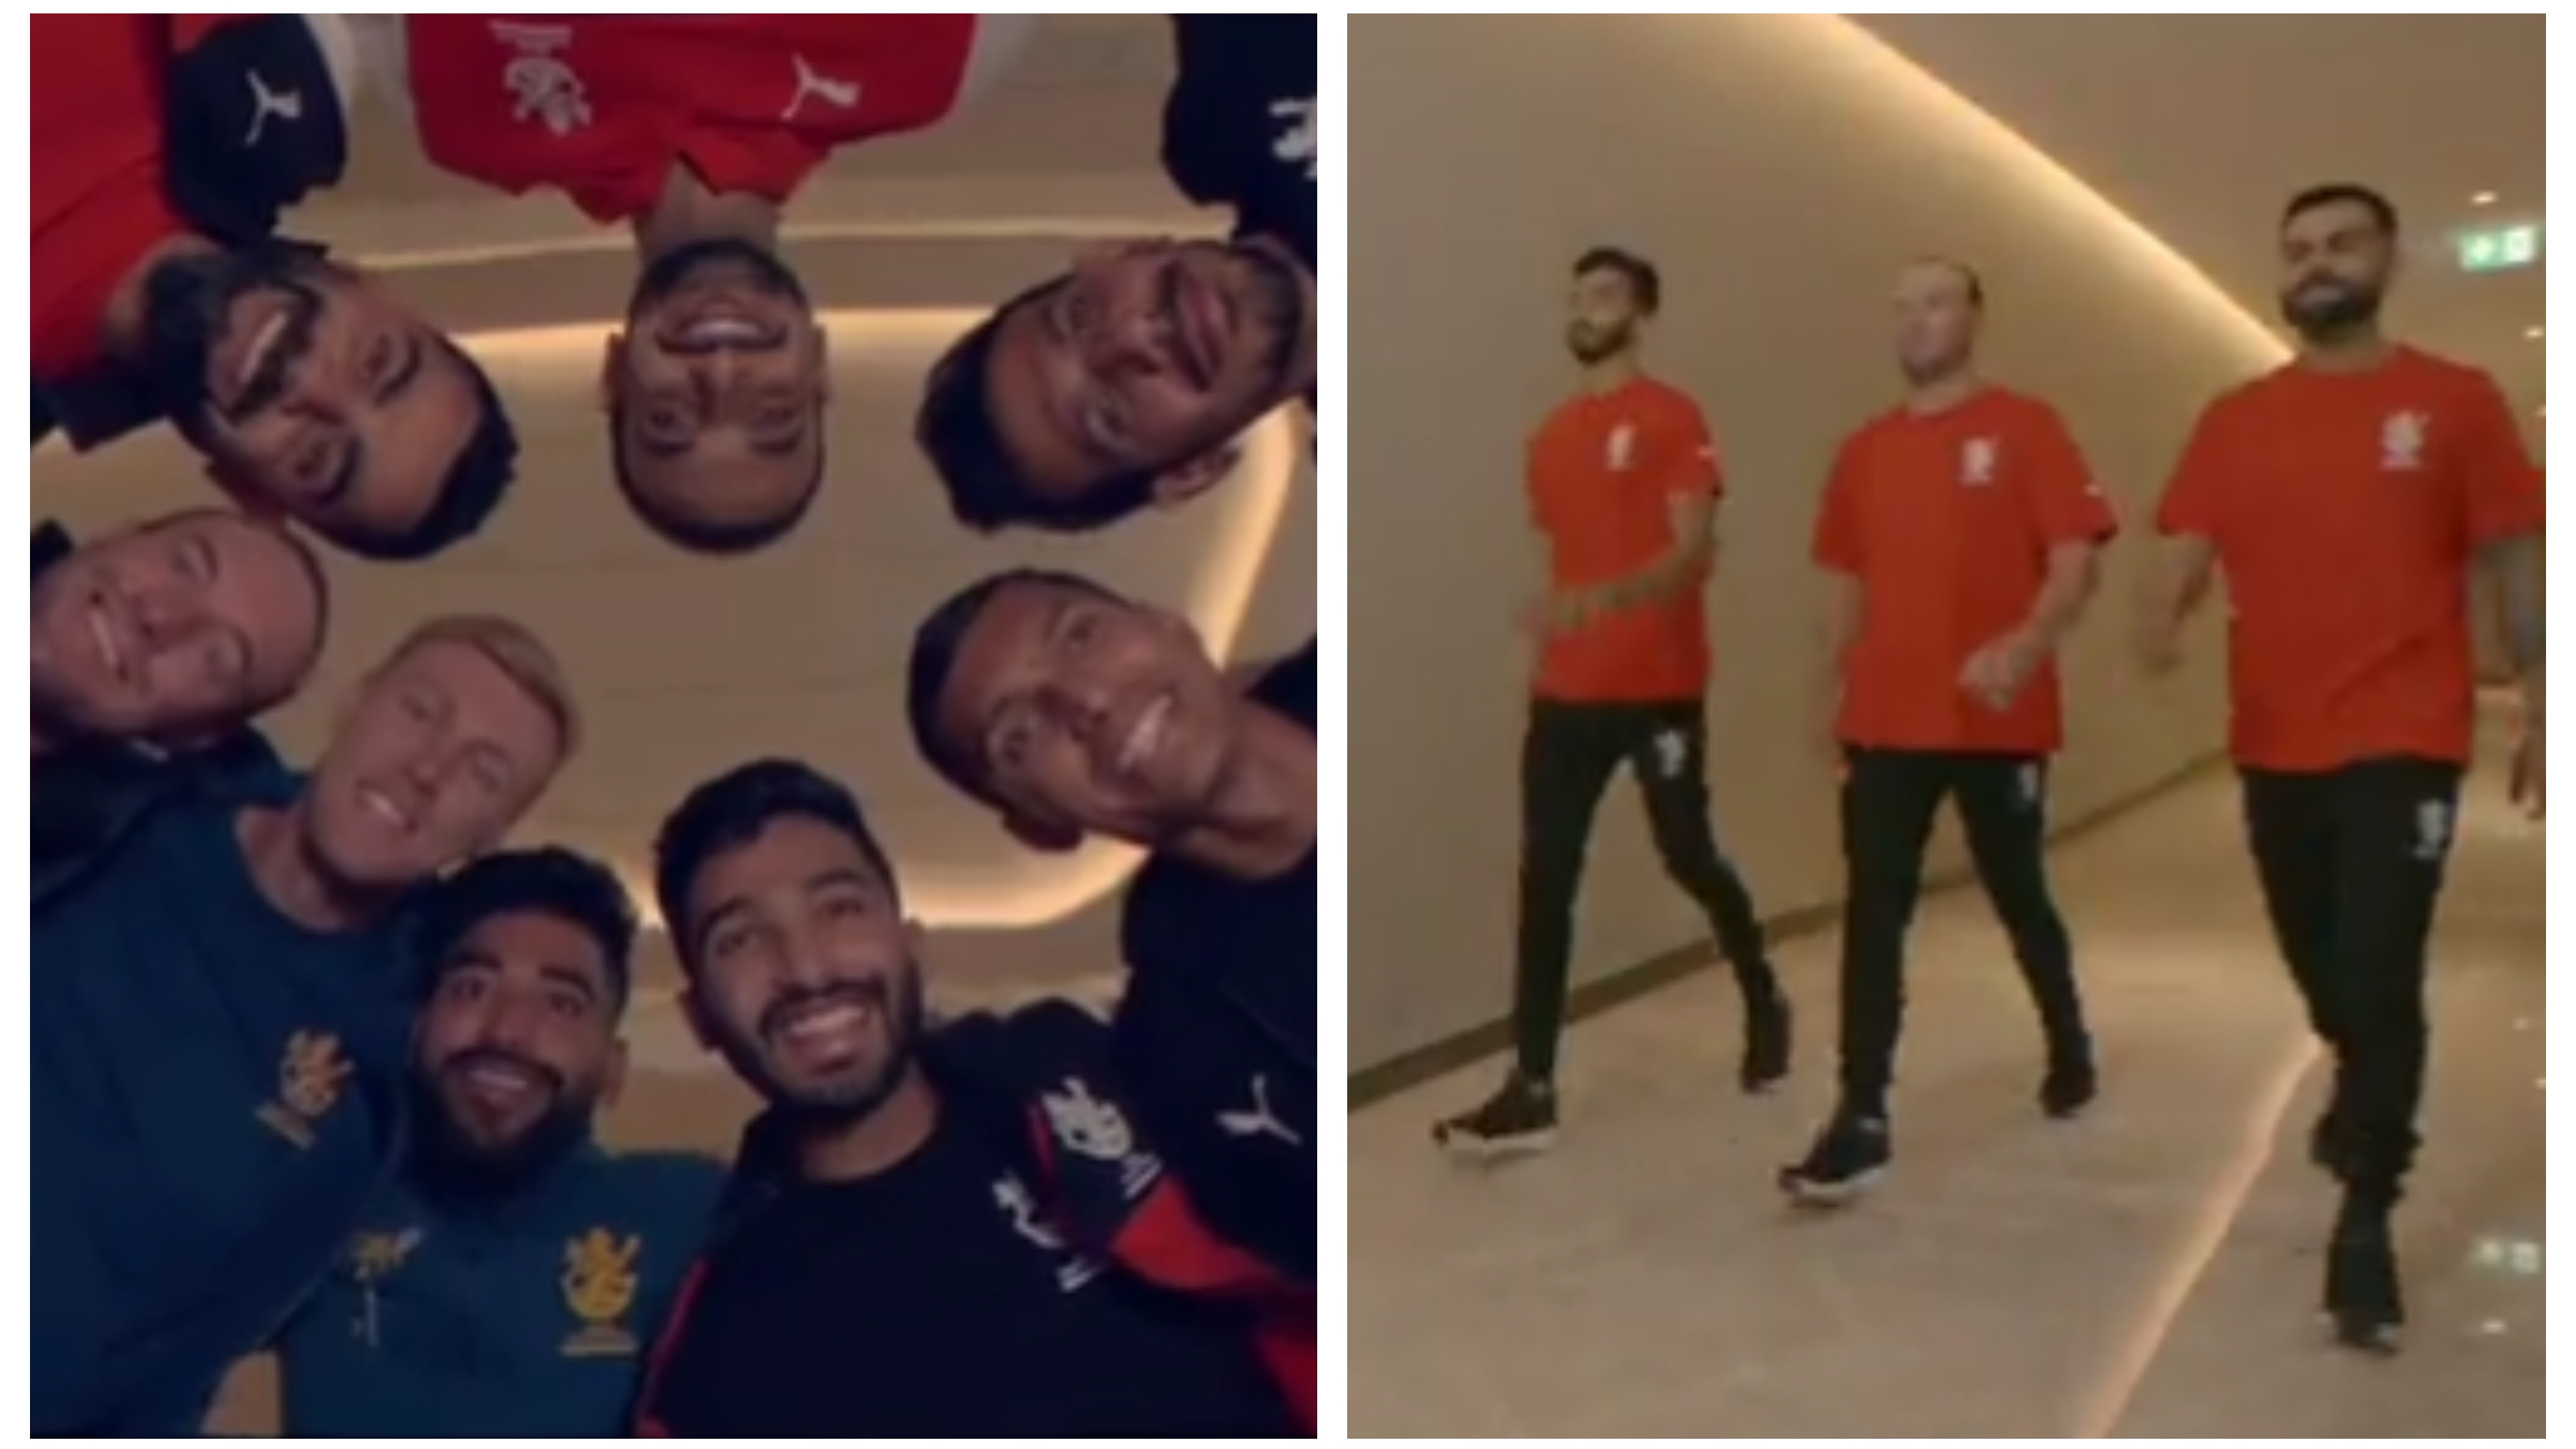 WATCH: Virat Kohli shares a music video celebrating RCB players’ never give up attitude